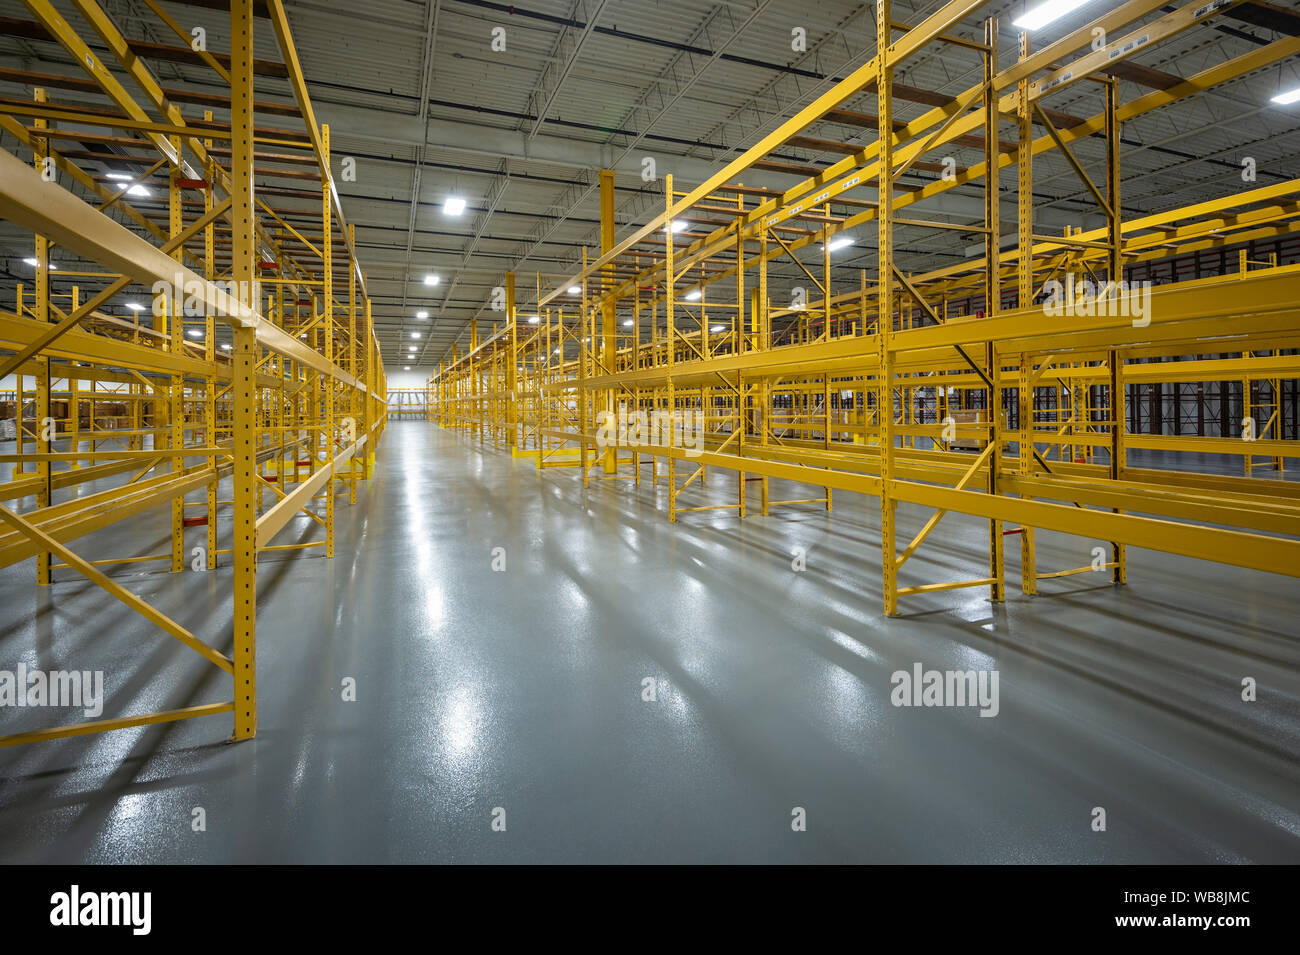 Empty Shelves In Empty Warehouse Stock Photo